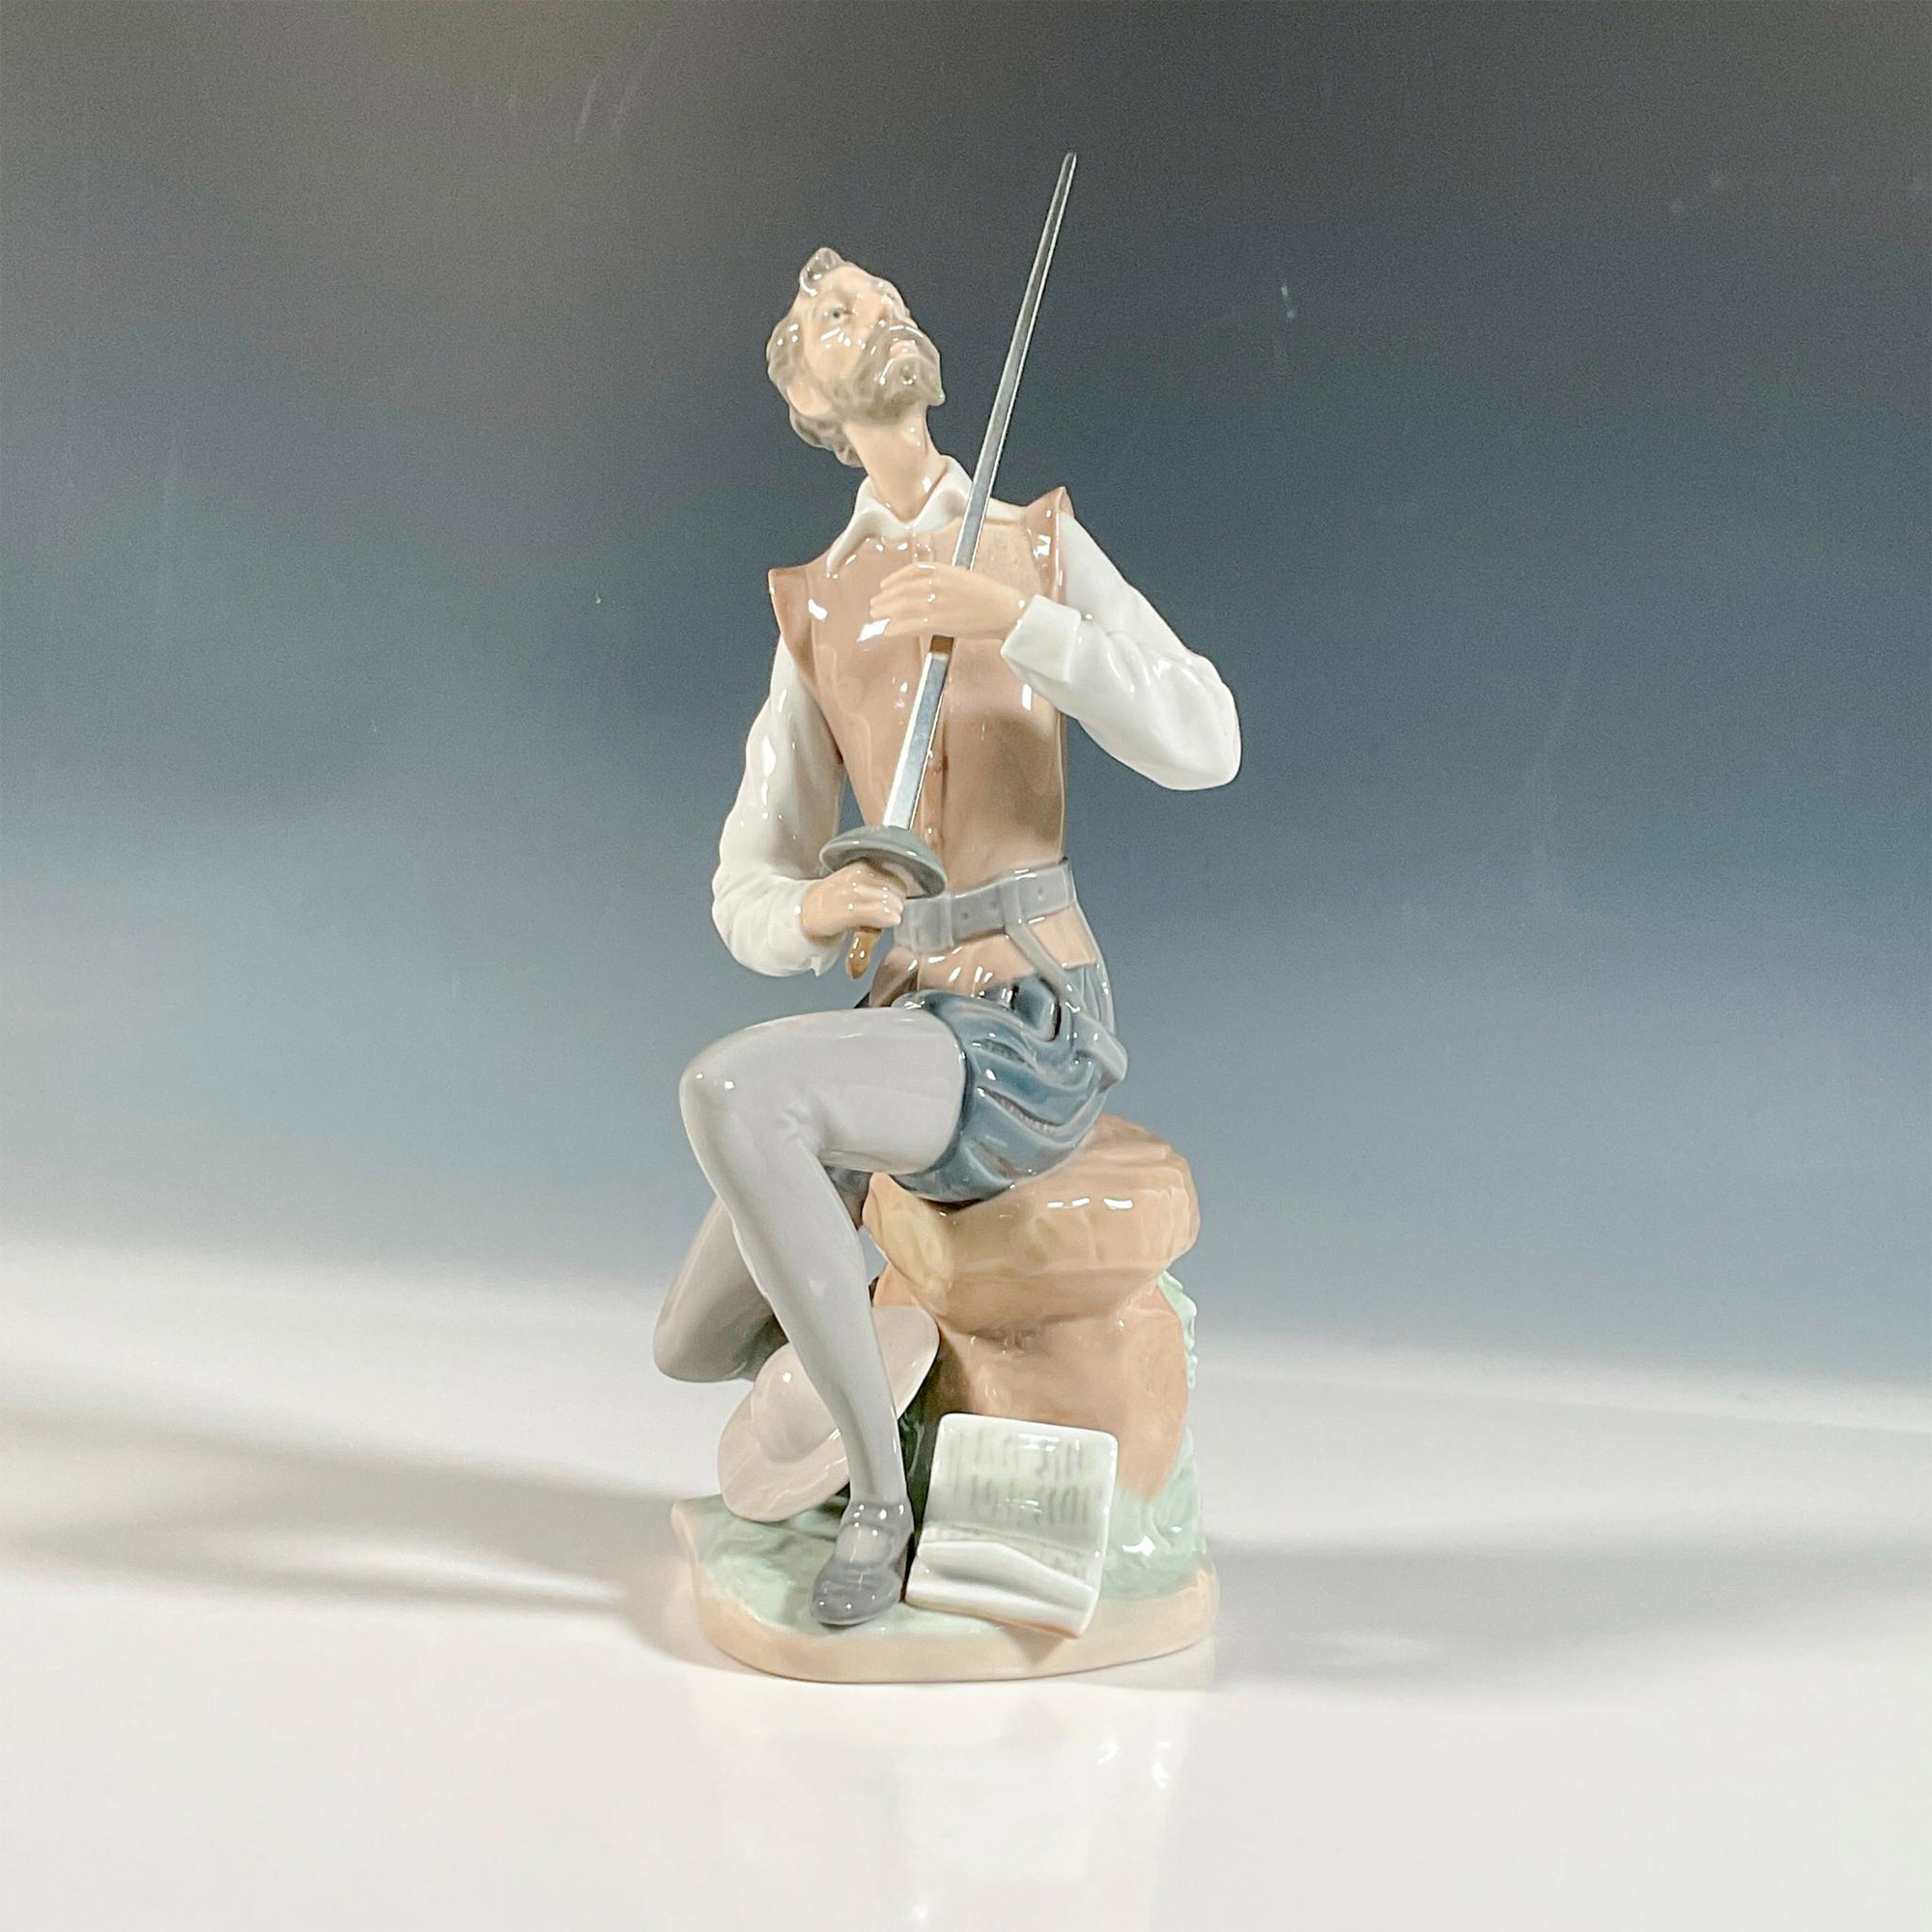 Oration 1005357 - Lladro Porcelain Figurine - Image 2 of 4